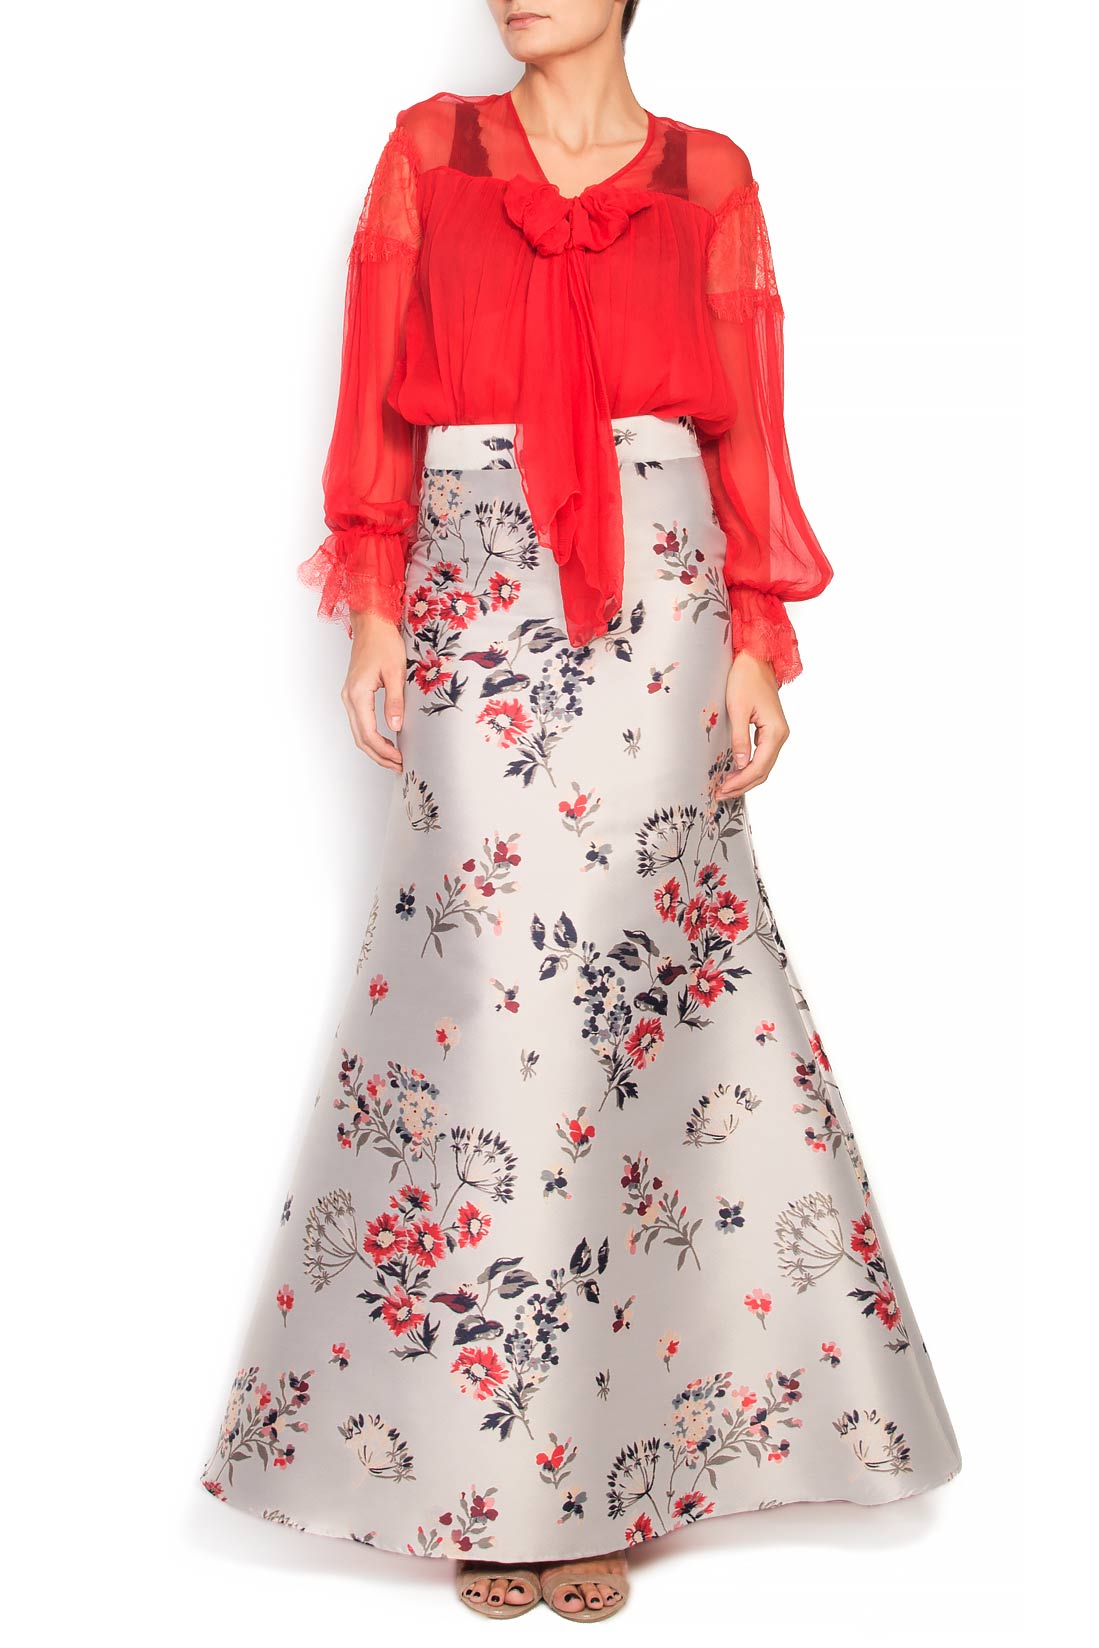 Floral-print jacquard maxi skirt Elena Perseil image 0